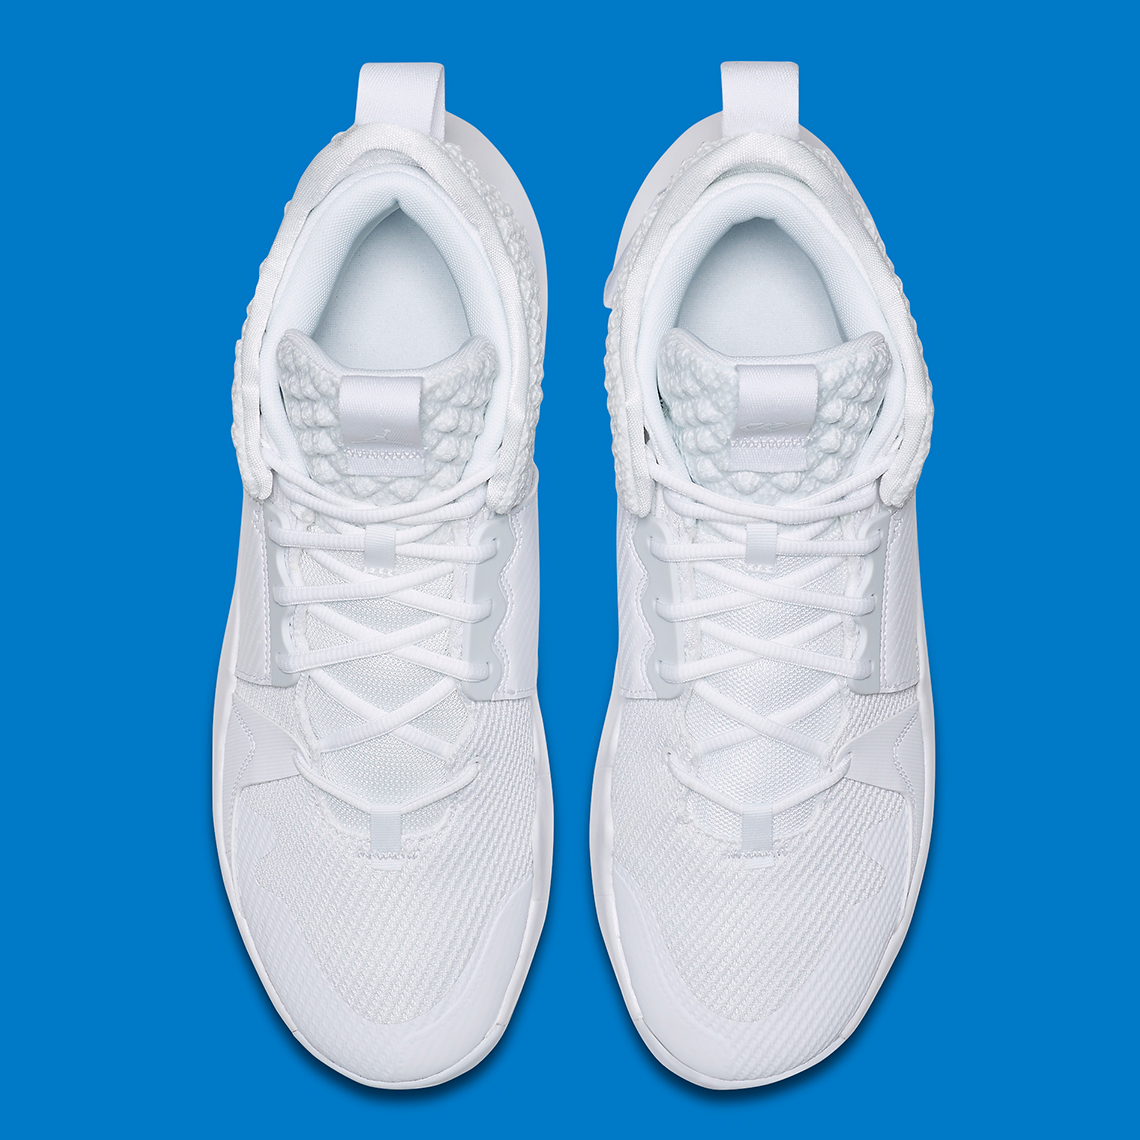 Jordan Why Not Zer0.2 Triple White BV6352-101 | SneakerNews.com